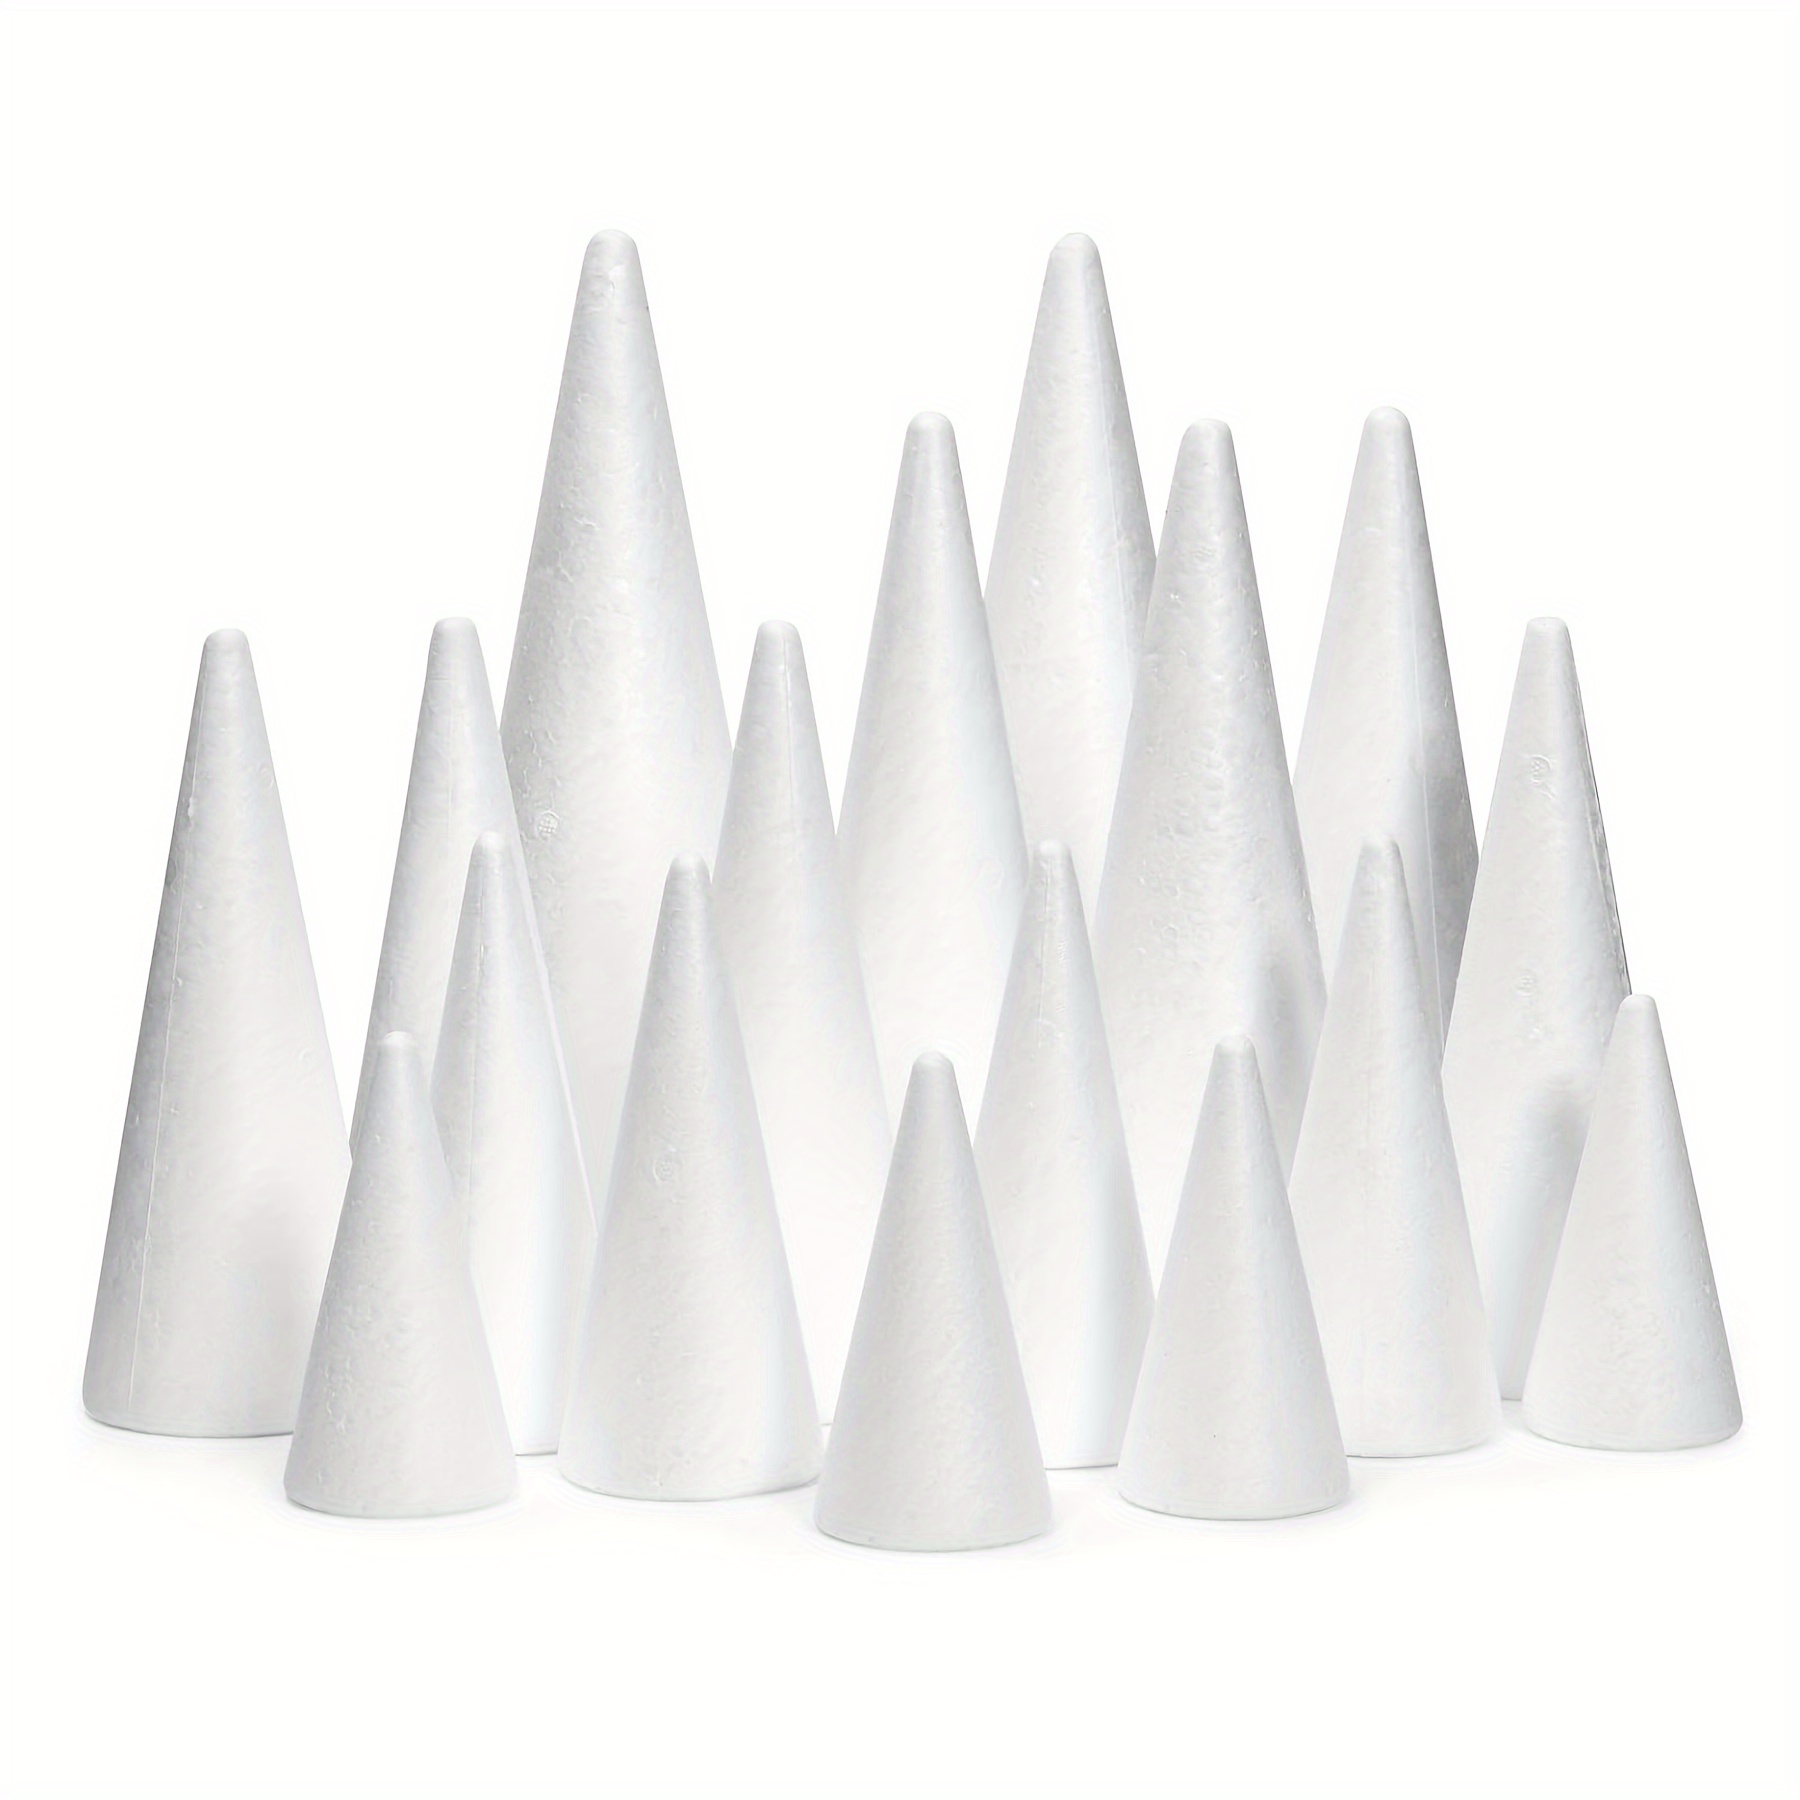 30Pcs cones 6 inch tall foam Cone Shape Cone Shaped foam Christmas foam